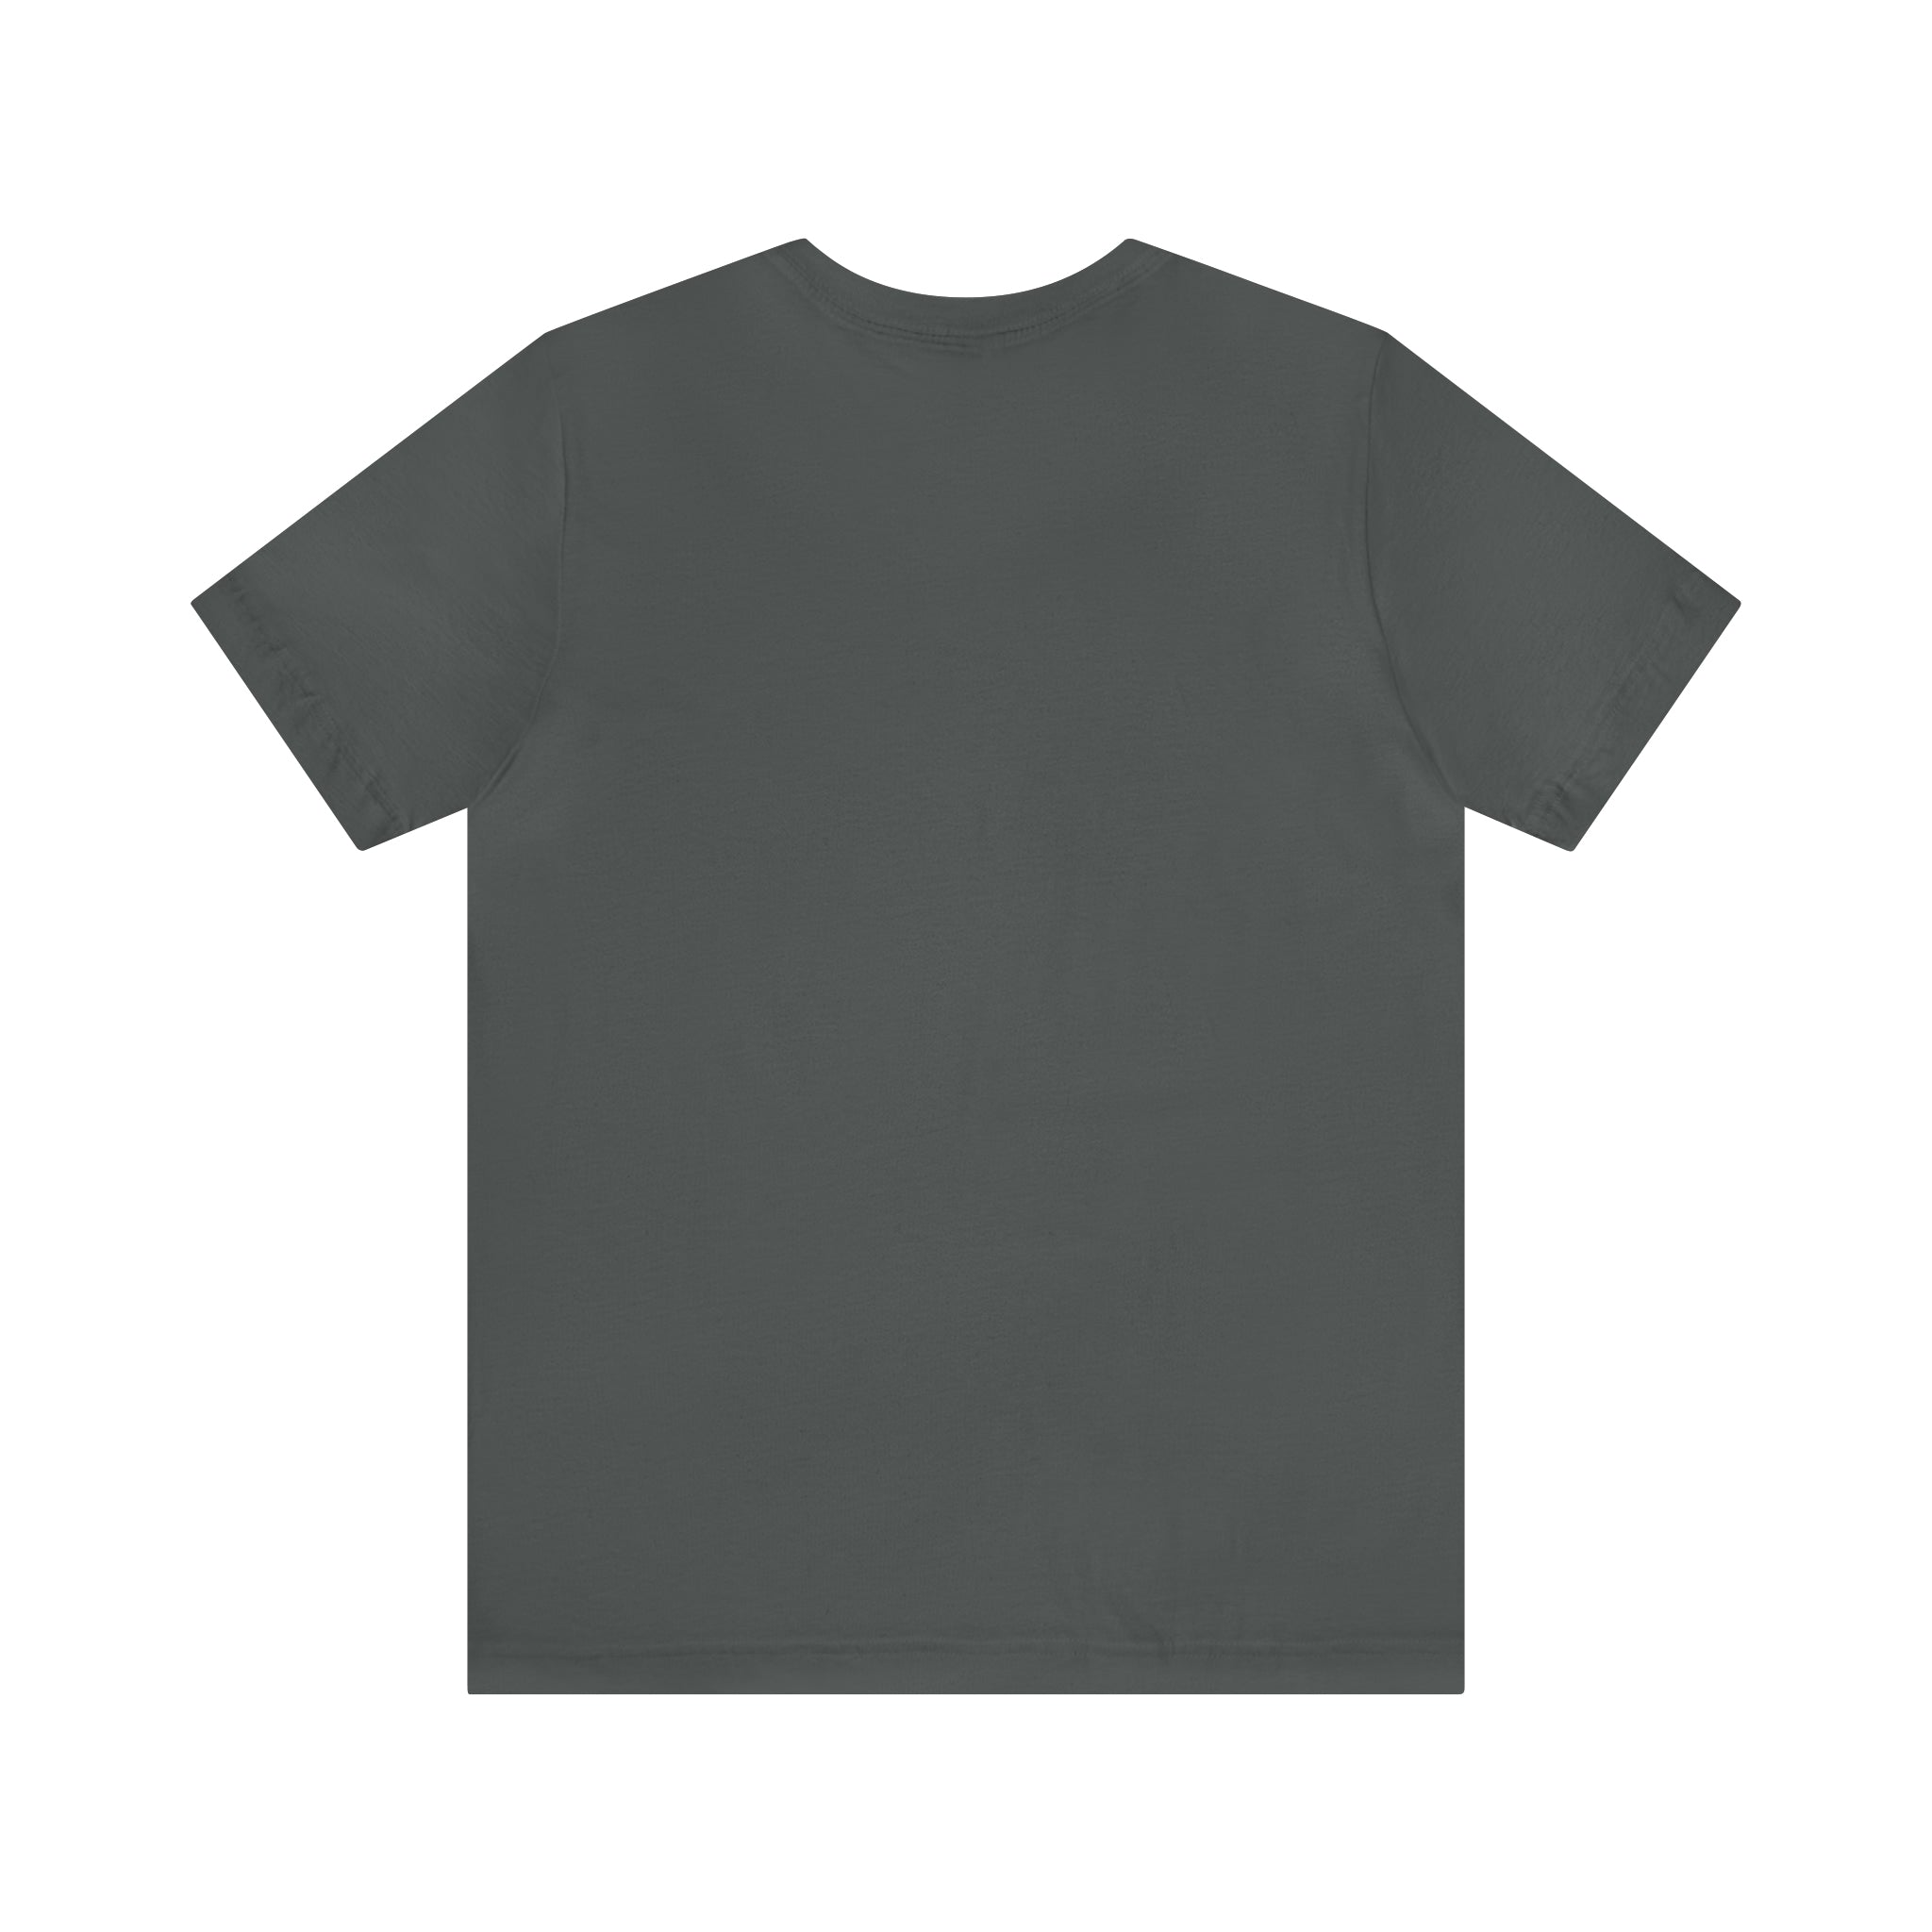 Printify T-Shirt Feeling Pumpkin Spicy  - Unisex Jersey Short Sleeve Tee